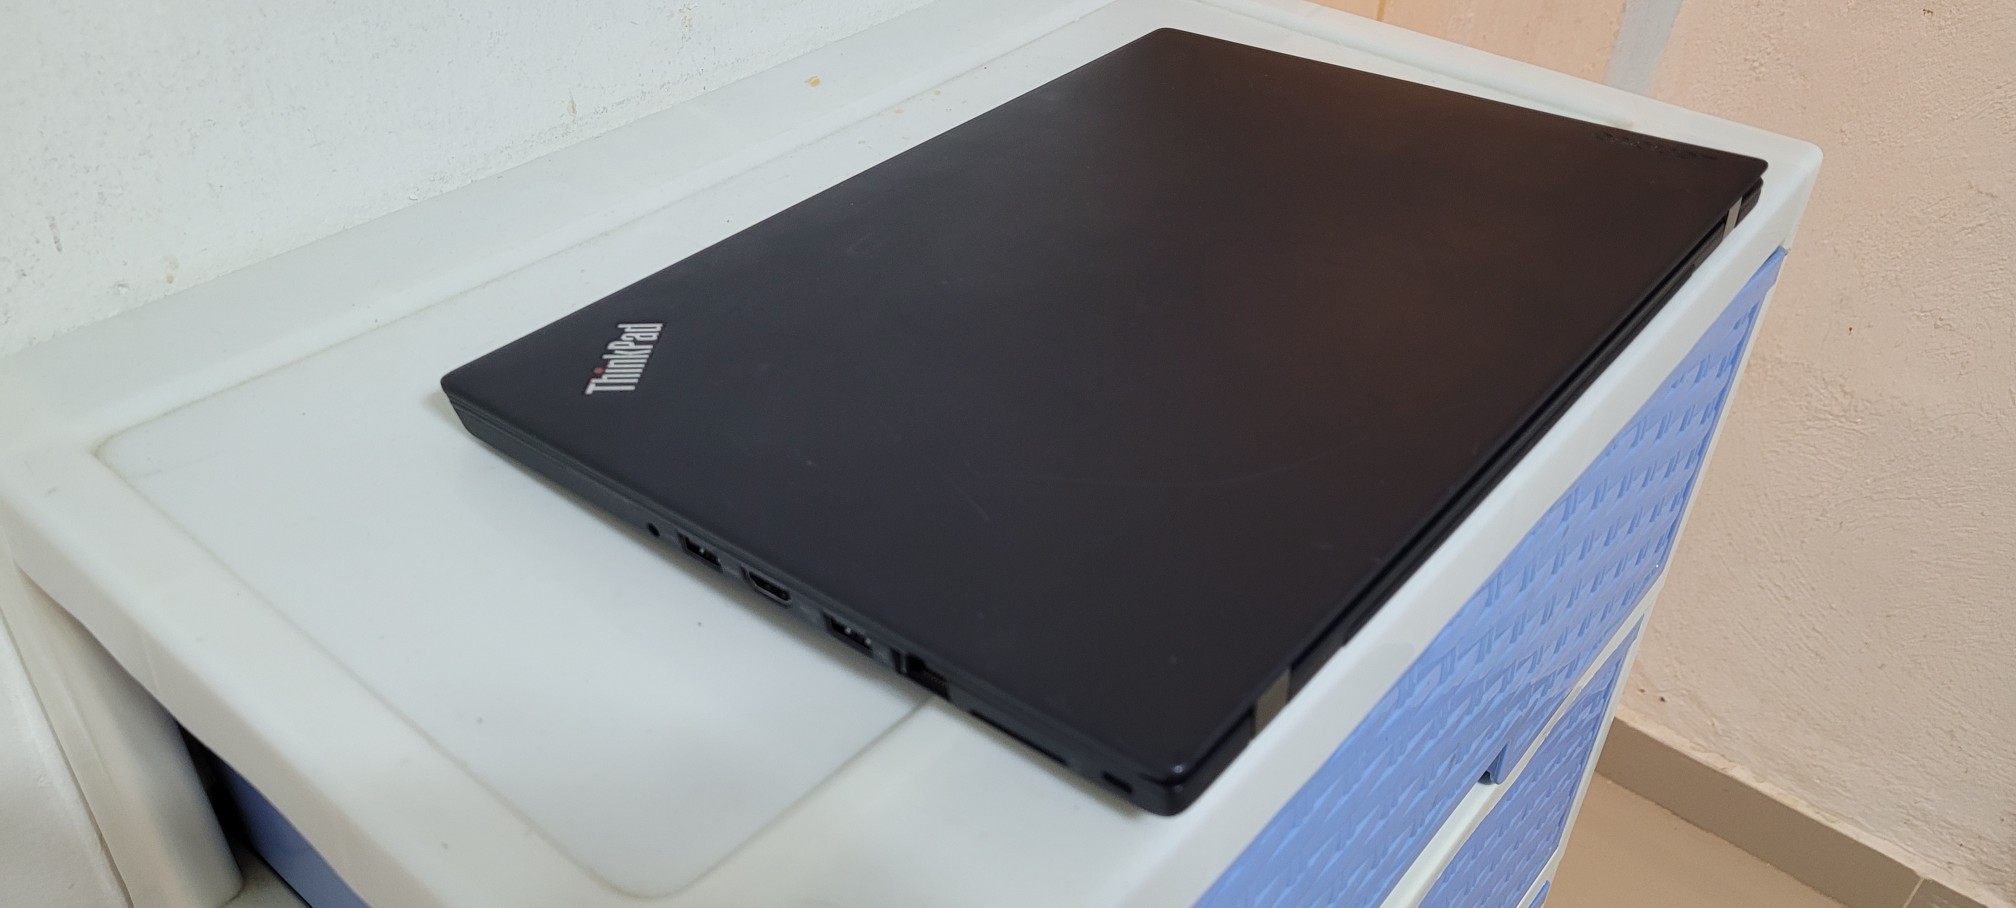 computadoras y laptops - Lenovo Slim 14 Pulg Core i7 Ram 8gb Disco 256gb SSD Solido 1080p 2